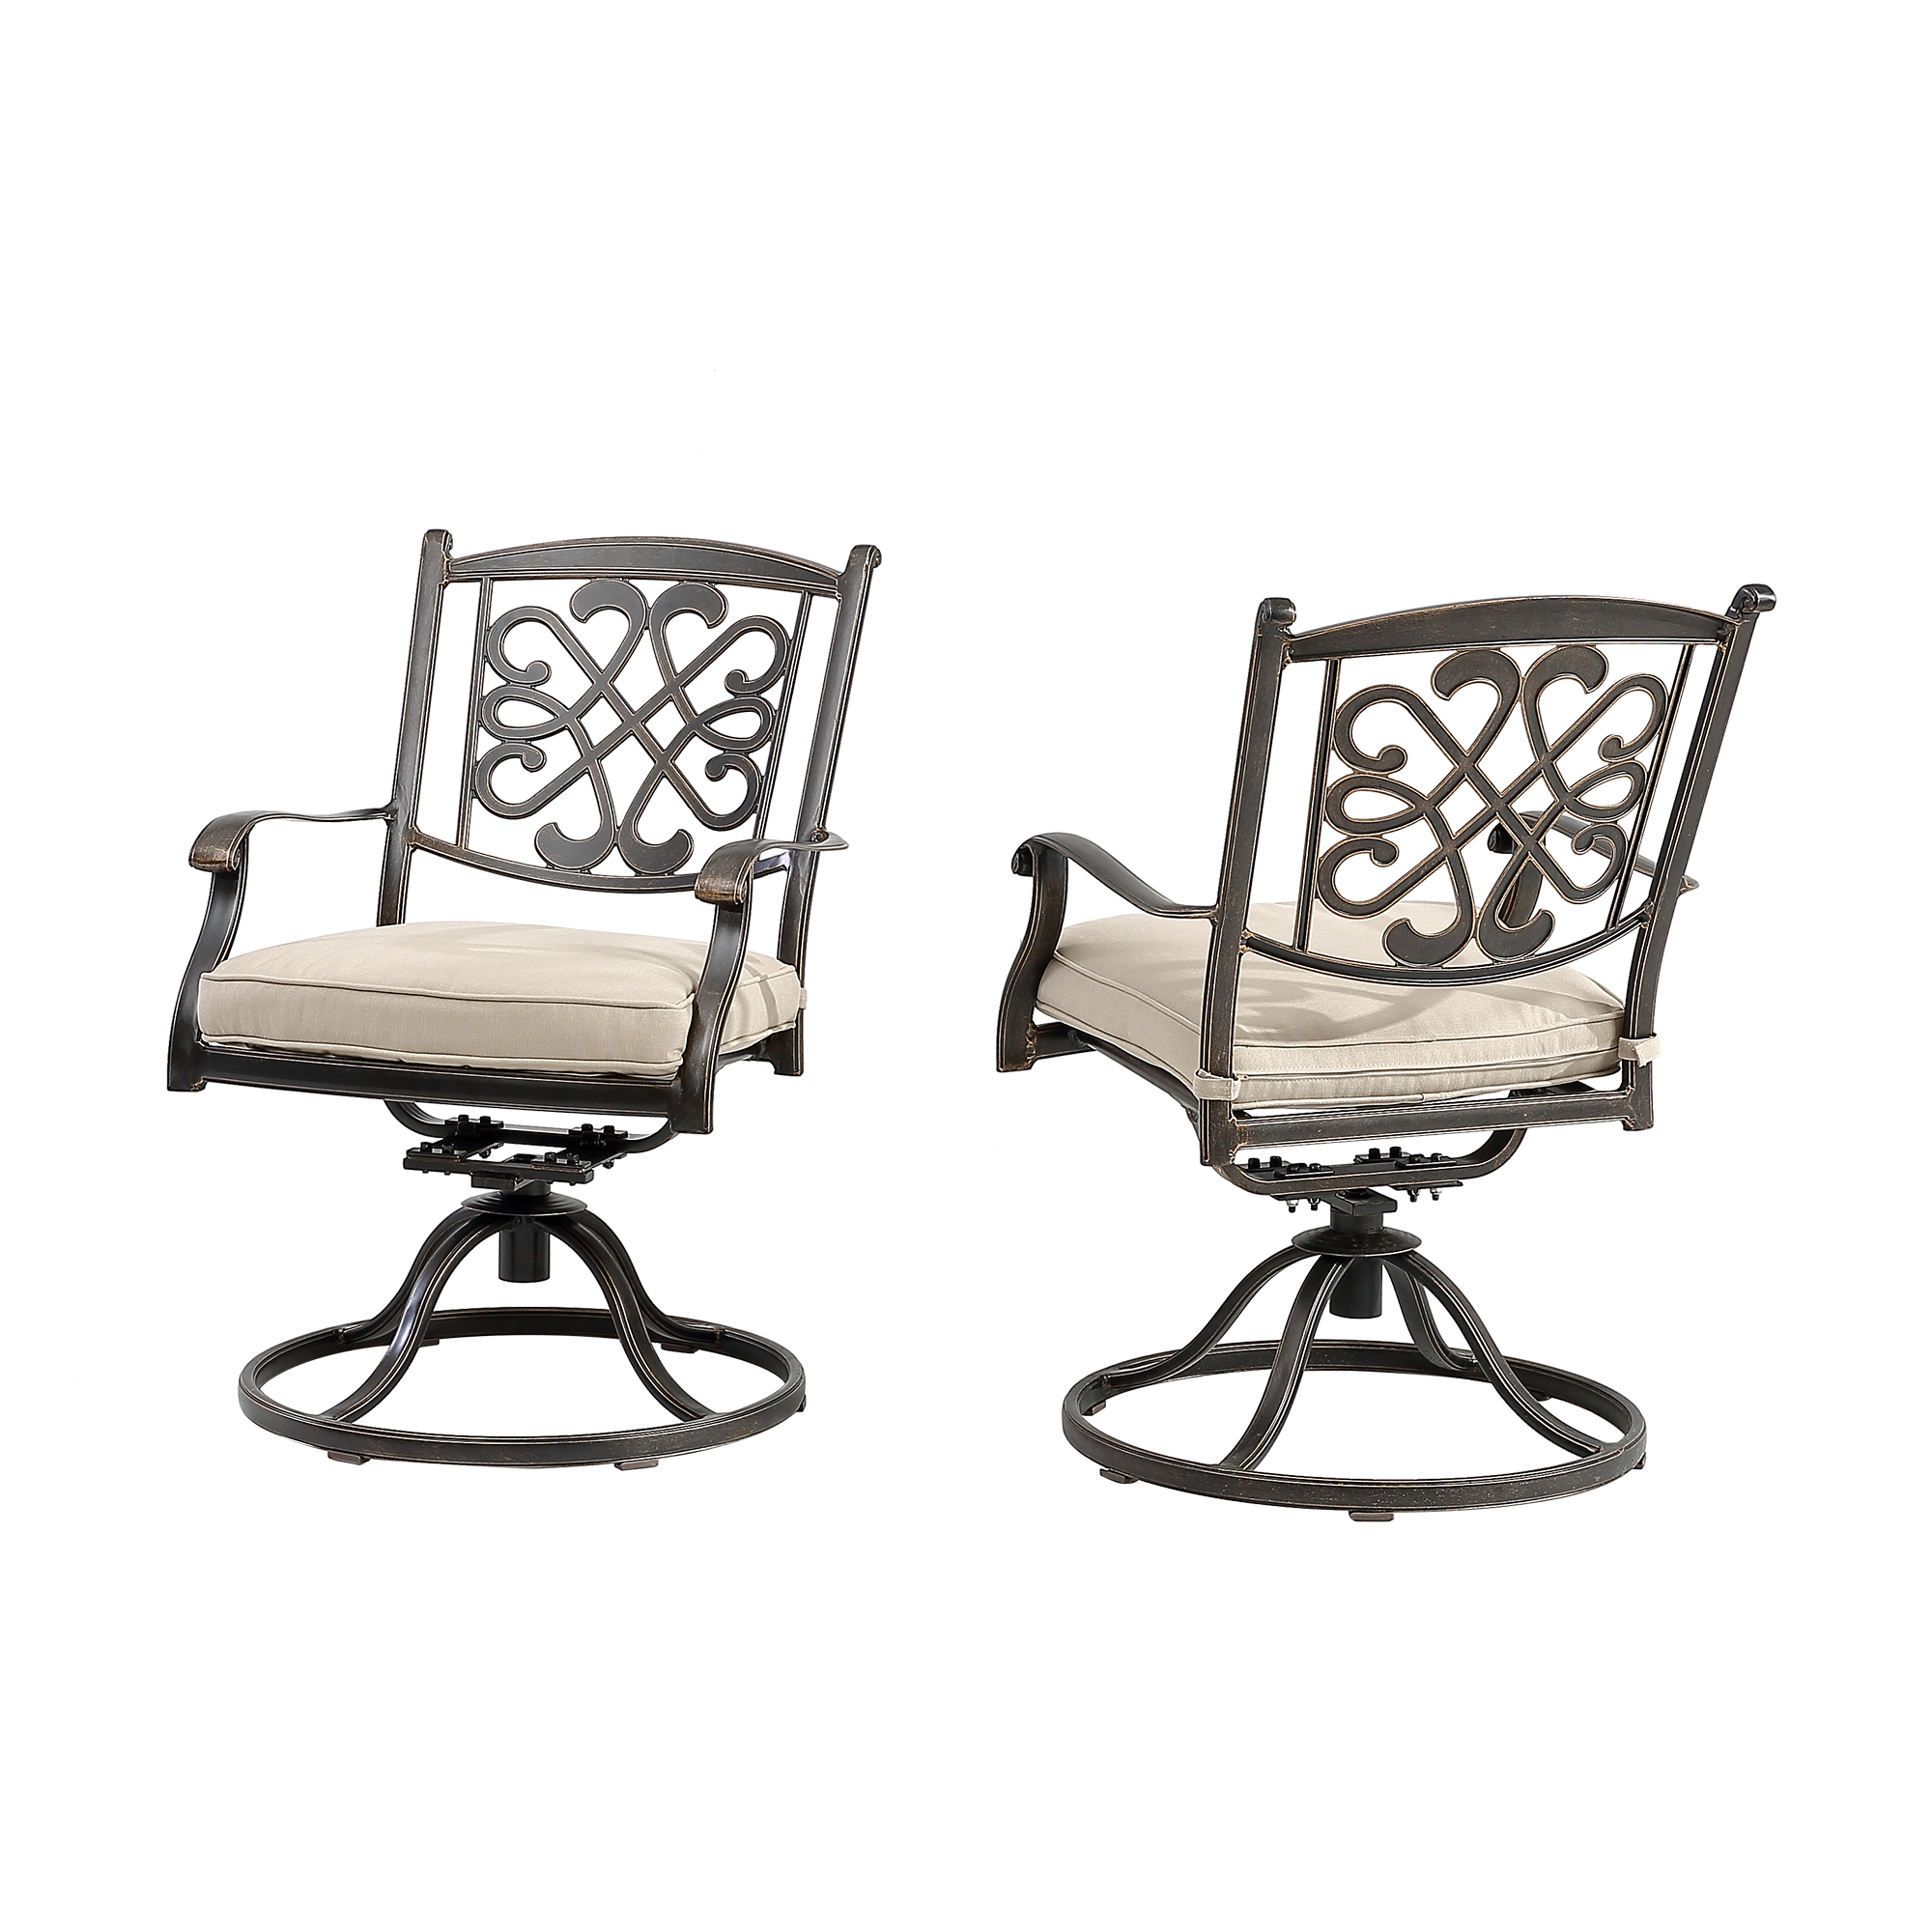 Mondawe 2/4Pcs Cast Aluminum Flower-Shaped Backrest Swivel Chairs in Beige/Orange